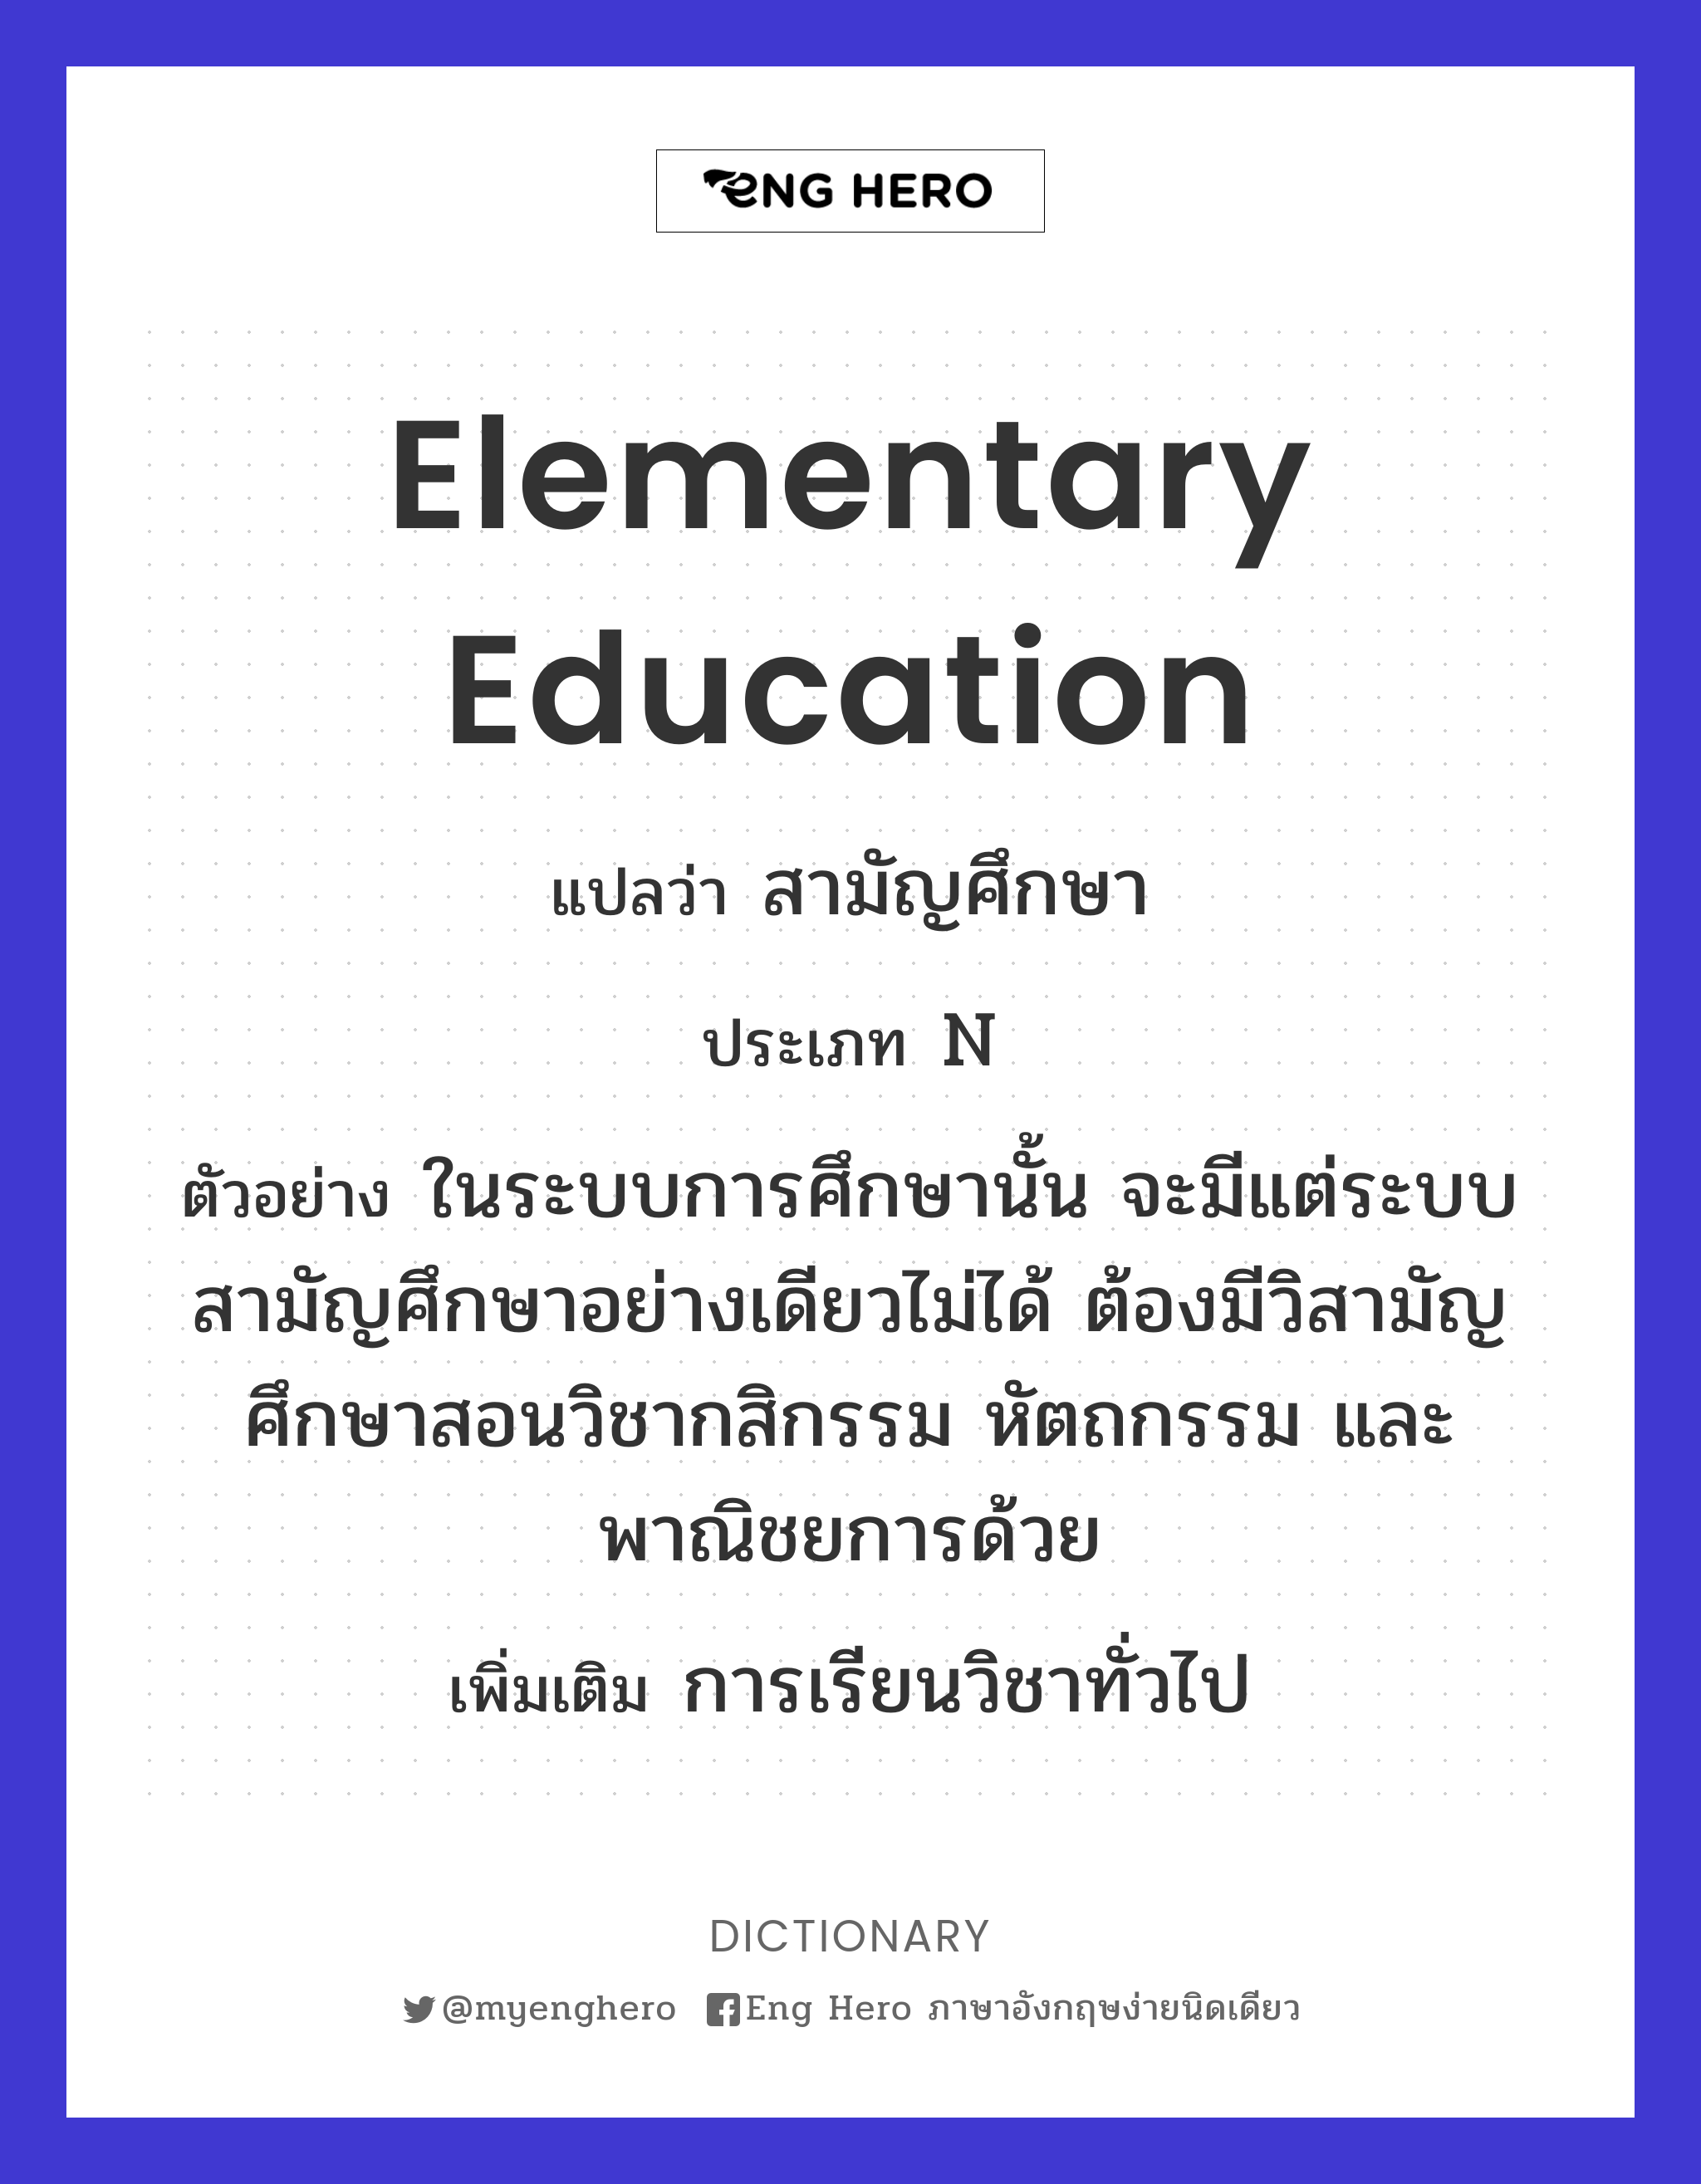 elementary education